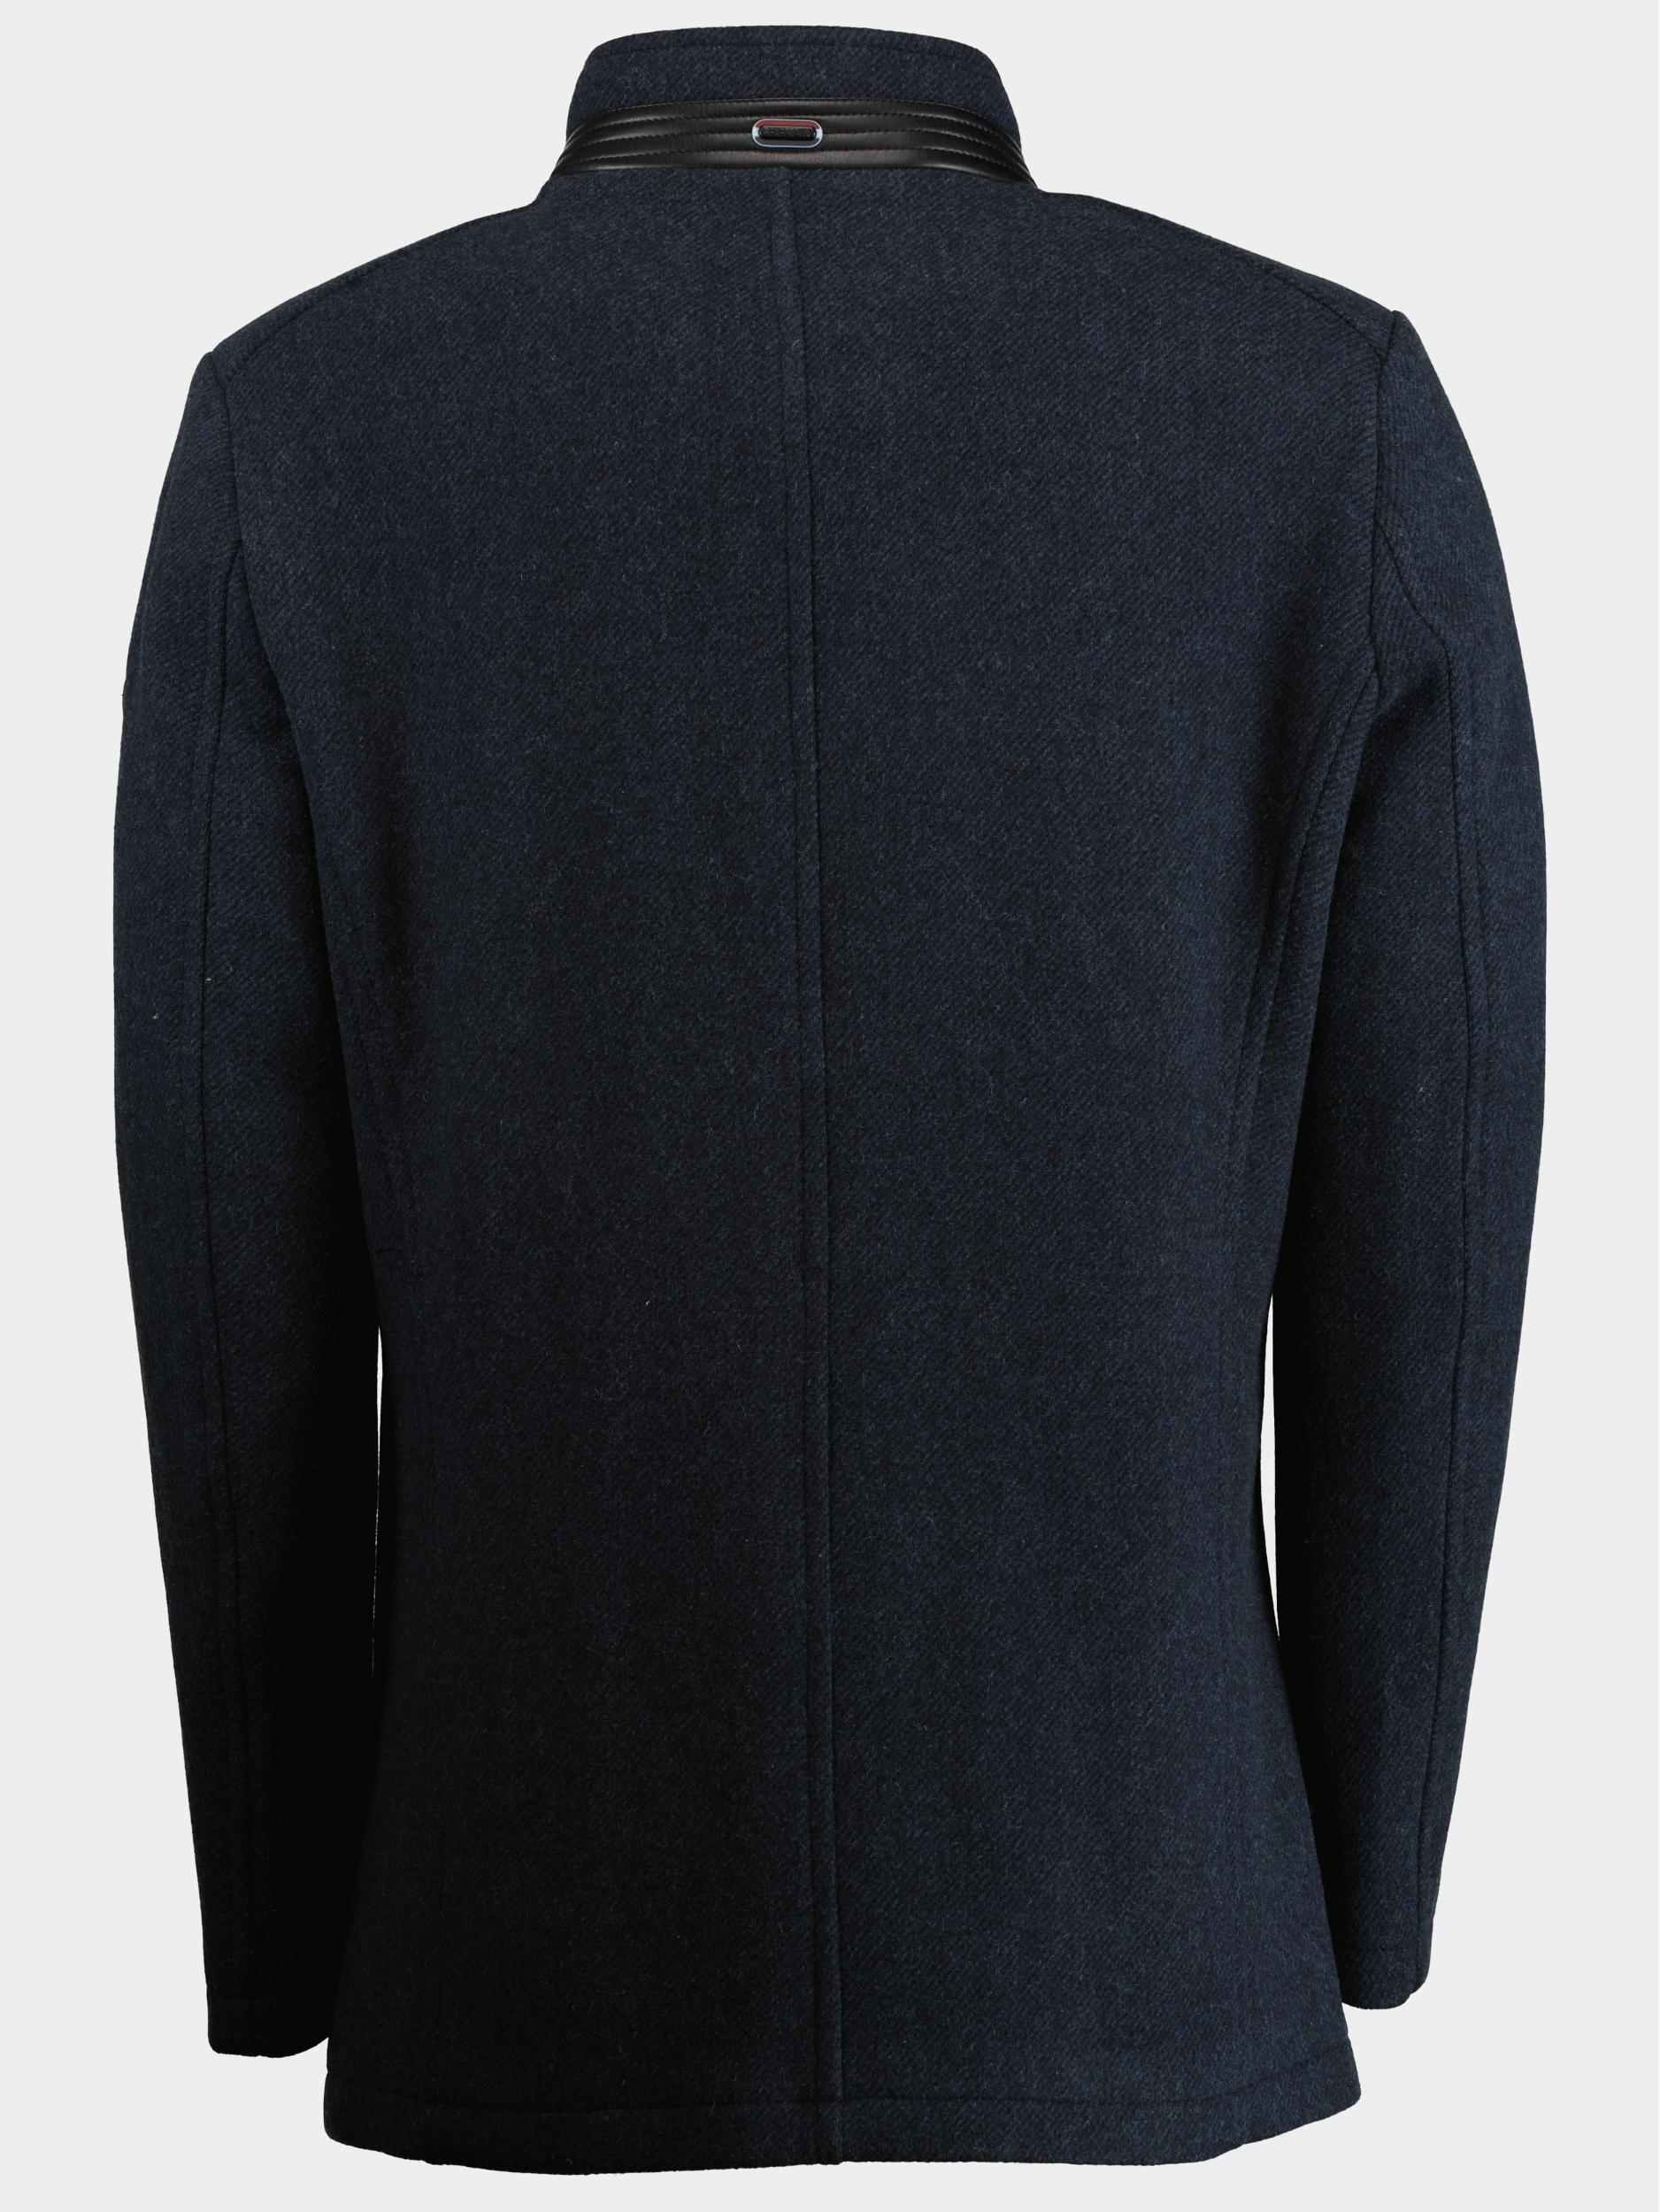 Donders 1860 Winterjack Blauw Textile jacket 21807/799